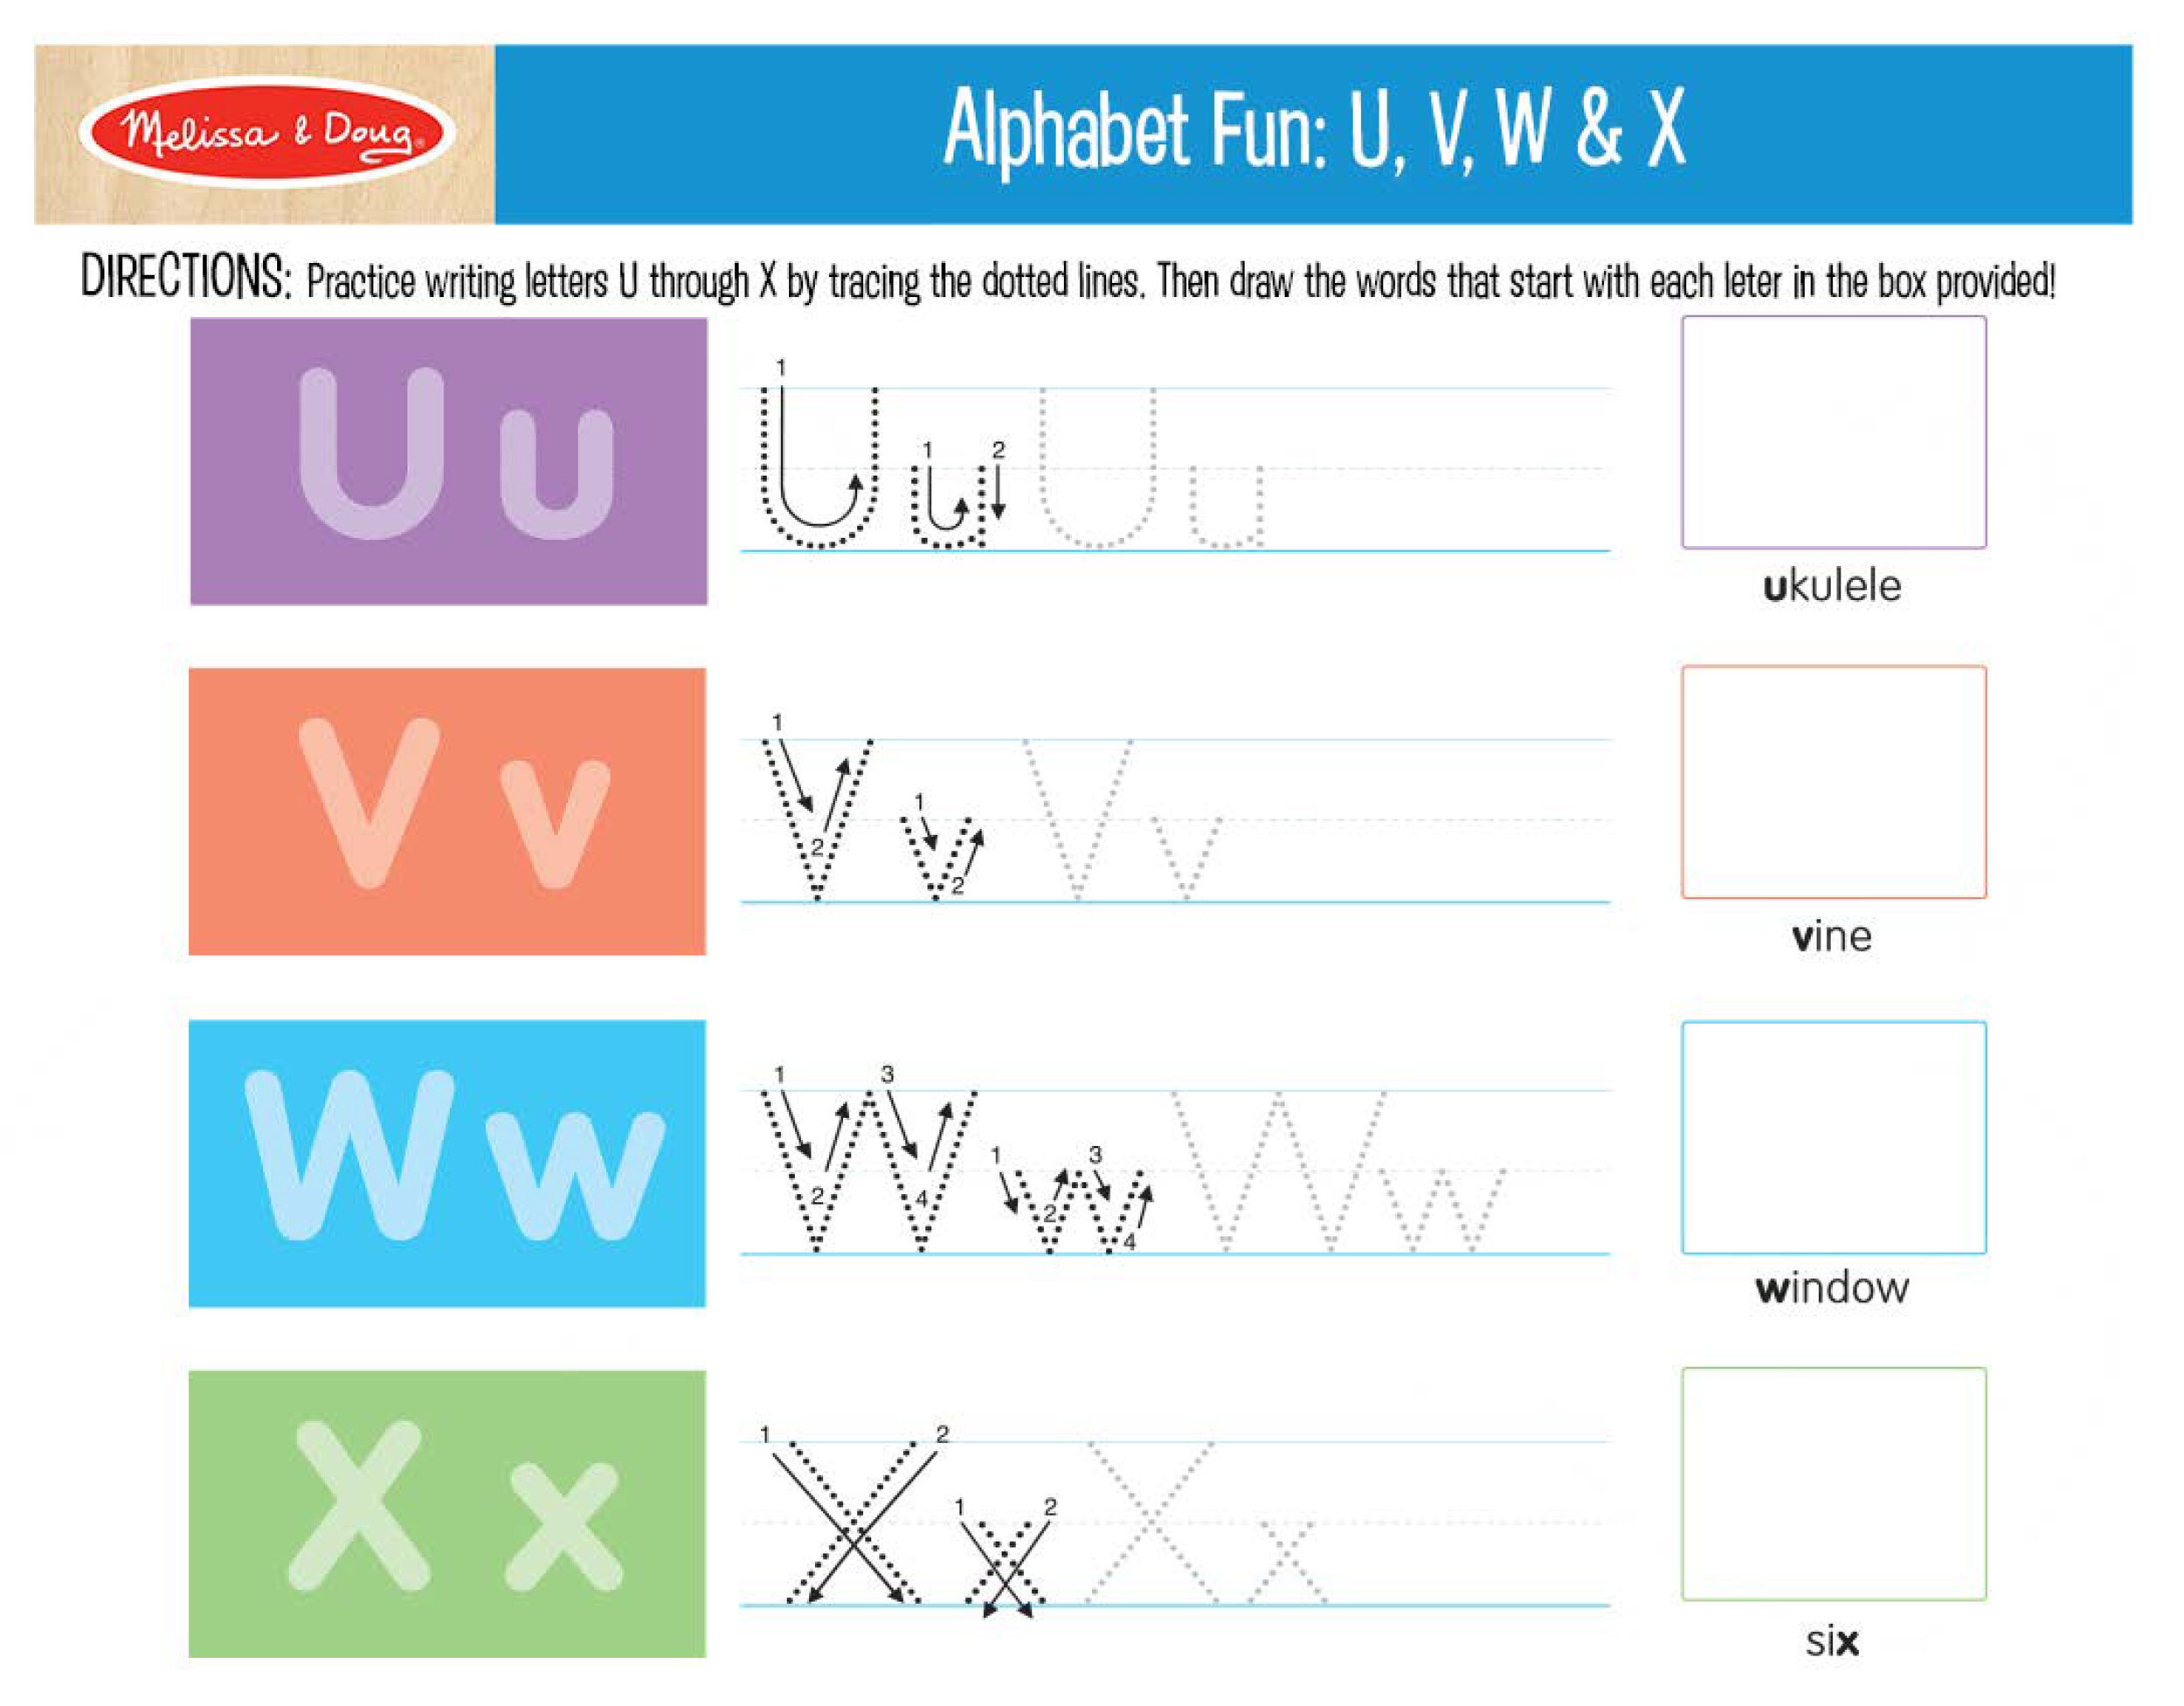 Printable_AlphabetFun-UVWX.jpg